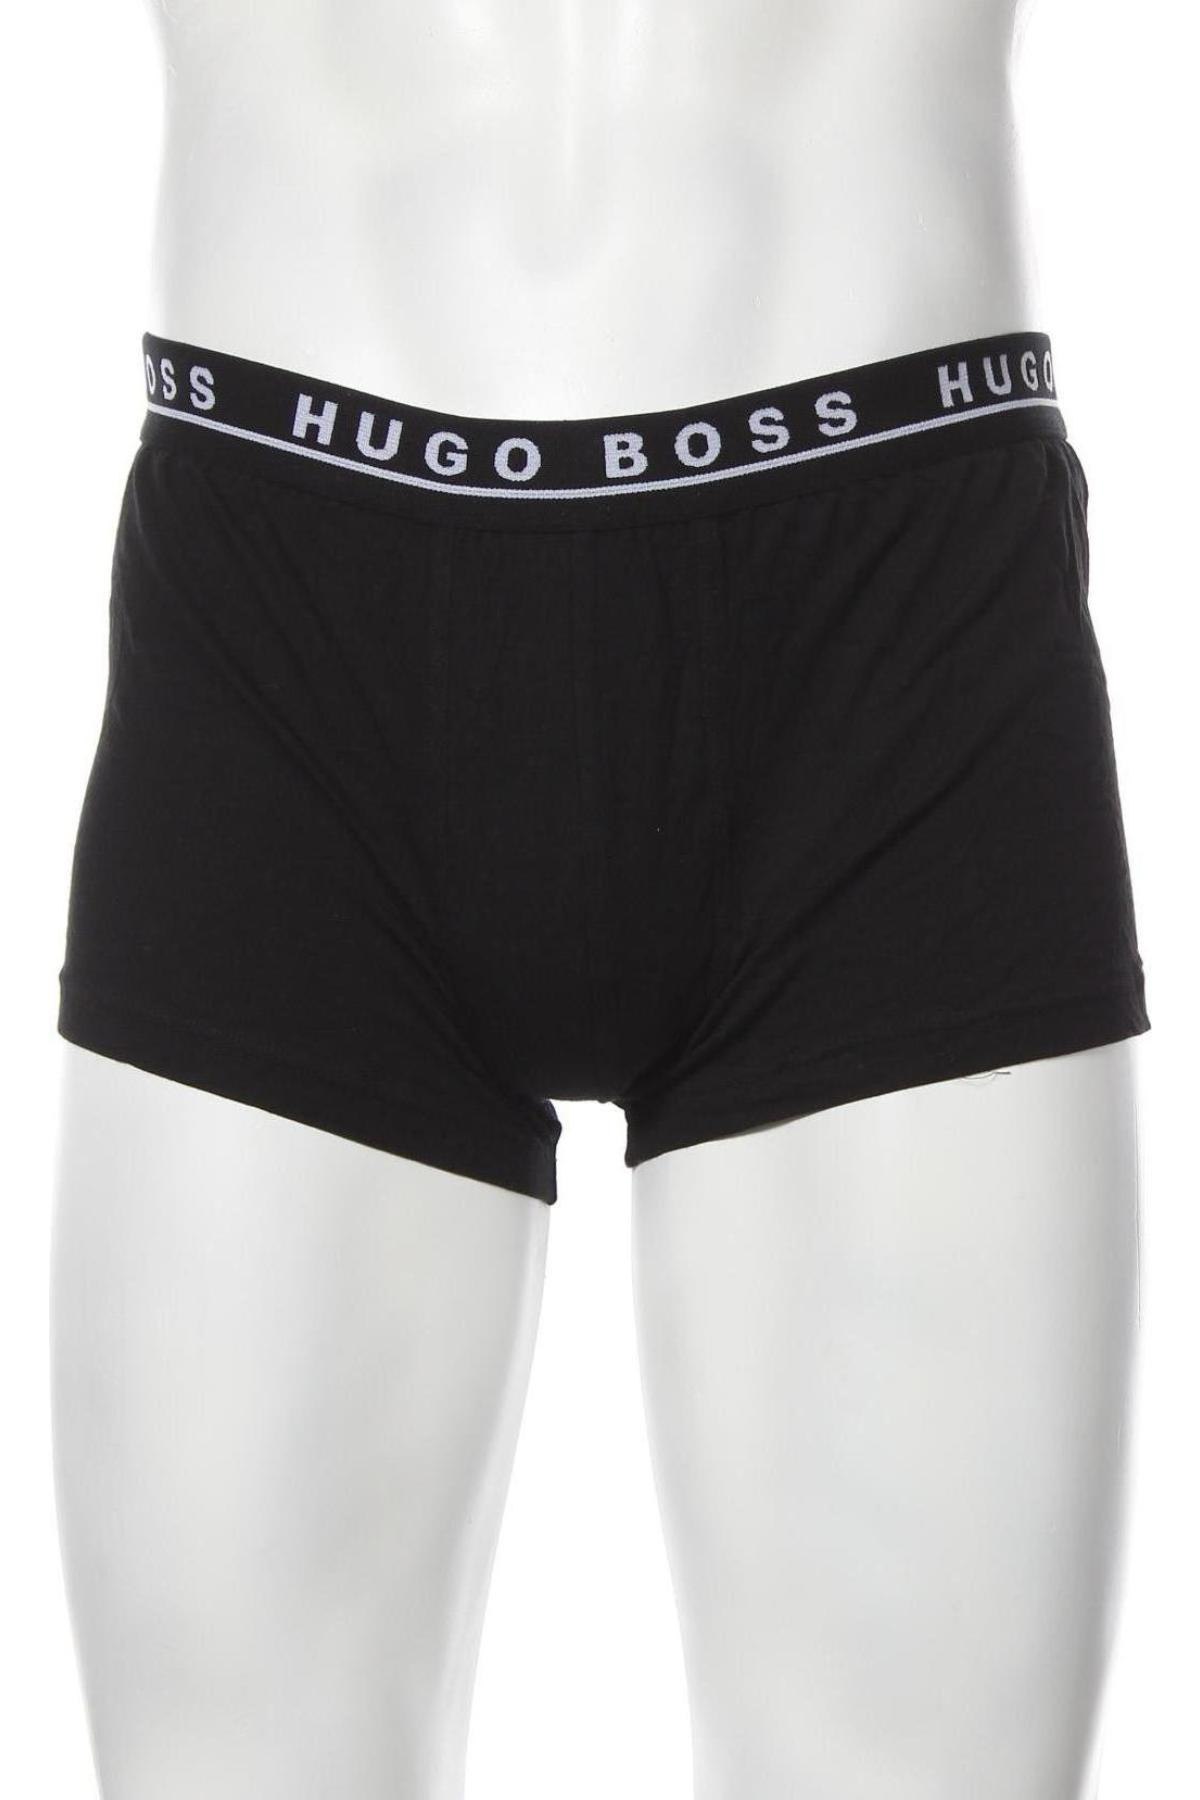 Pánský komplet  Hugo Boss, Velikost L, Barva Černá, 95% bavlna, 5% elastan, Cena  1 728,00 Kč